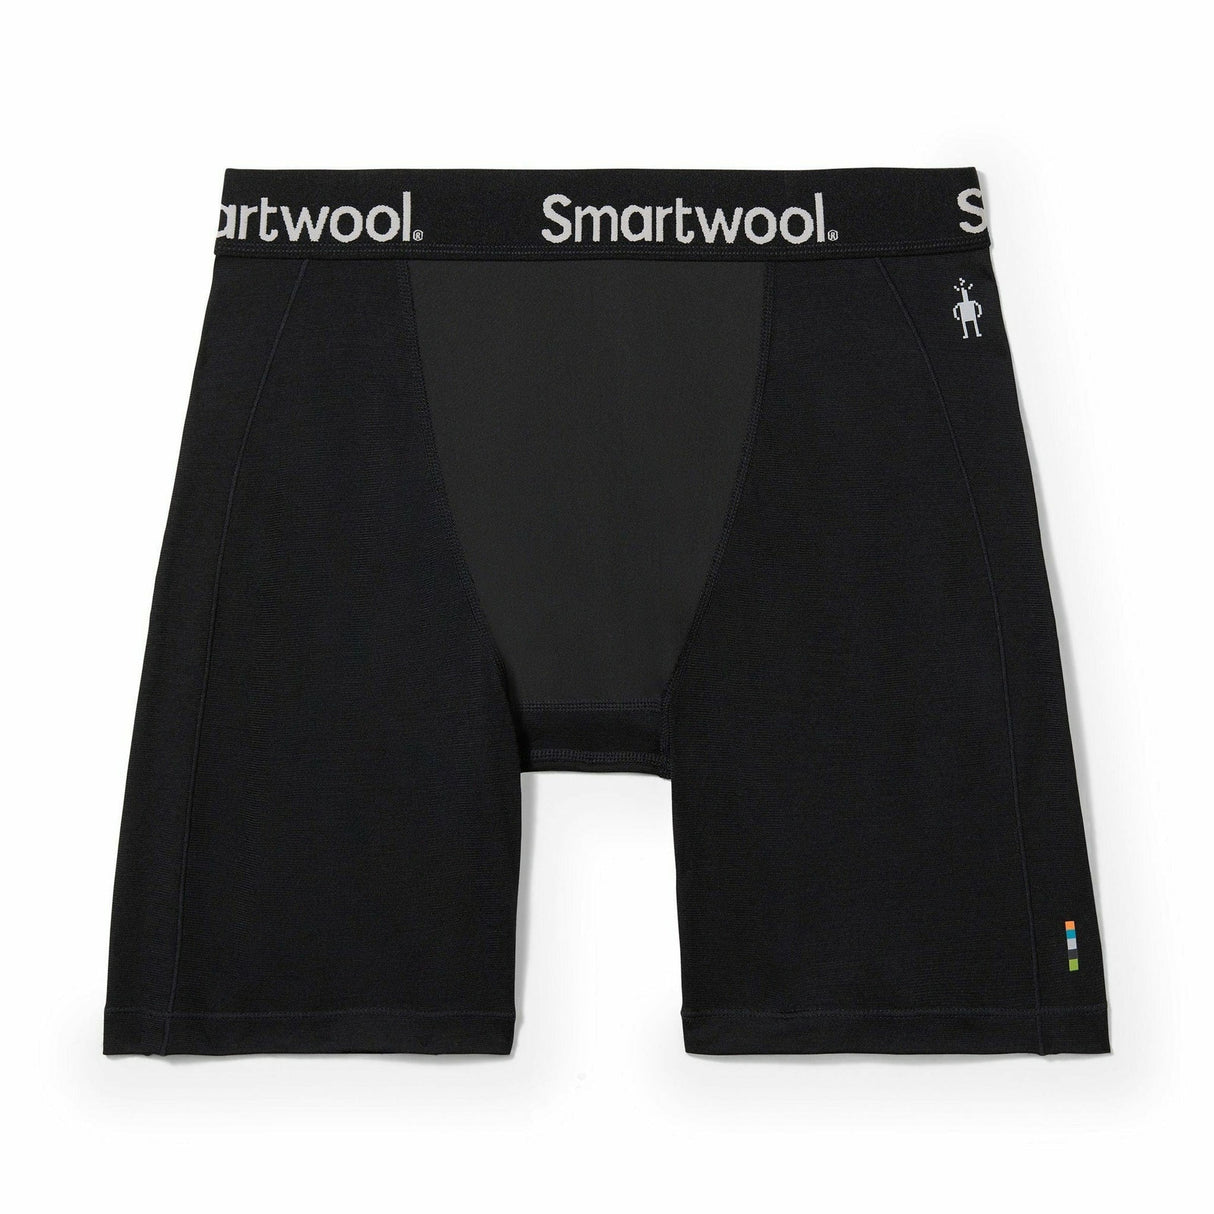 Smartwool Mens Merino Sport Wind Boxer Brief  -  Large / Black